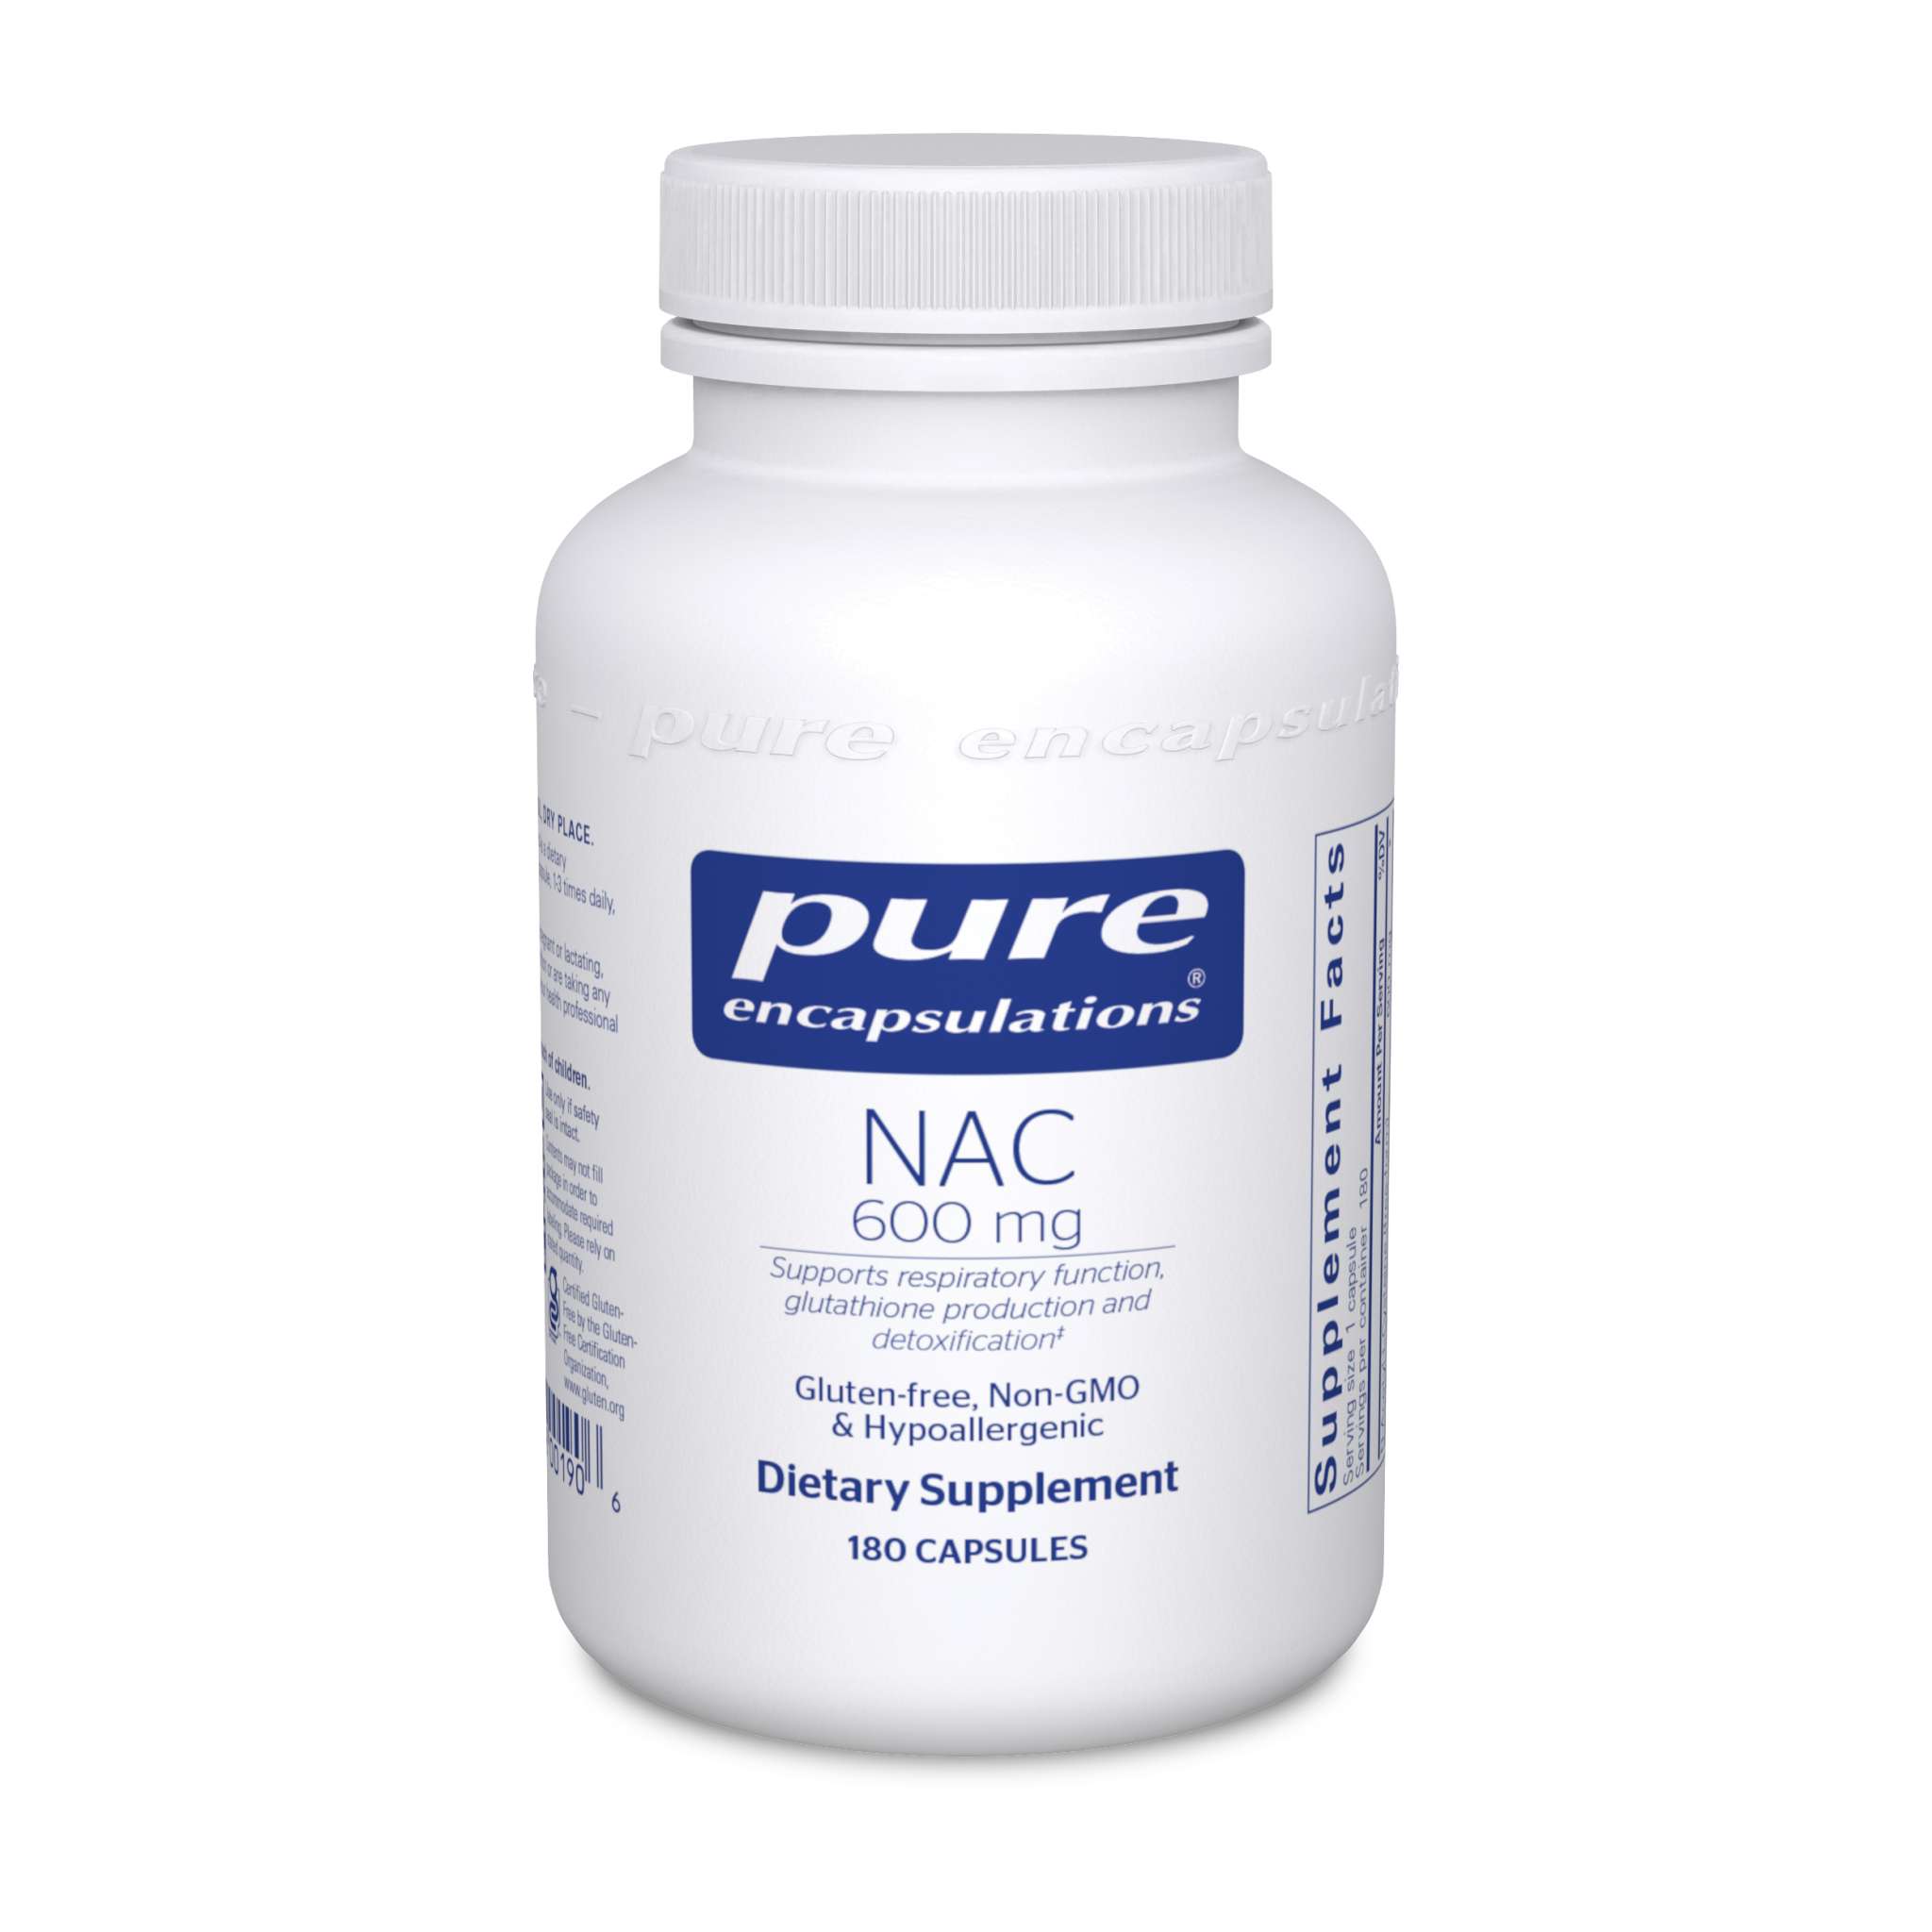 Pure Encapsulations - N A C 600 mg